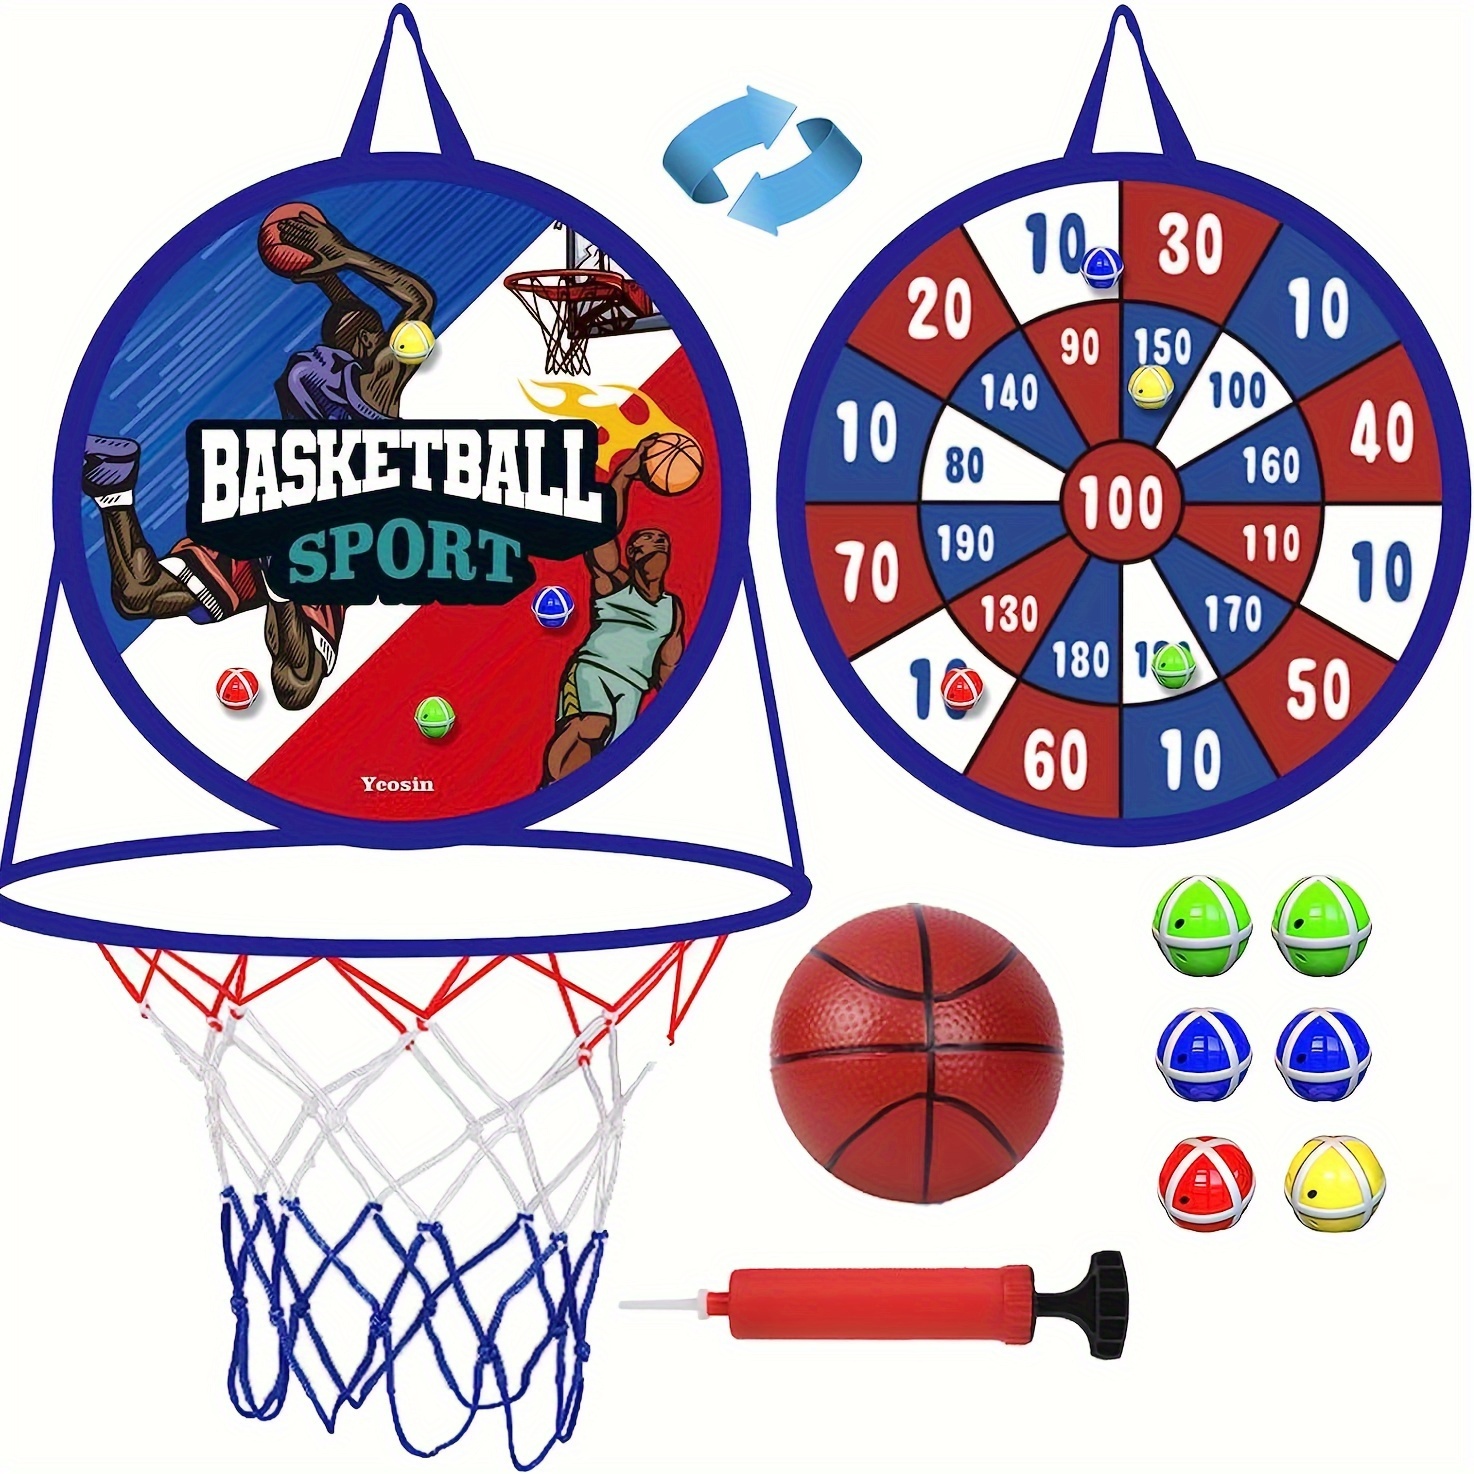 a2a979e22096b0ed52179cd94755345f--basketball-gifts-basketball-hoop